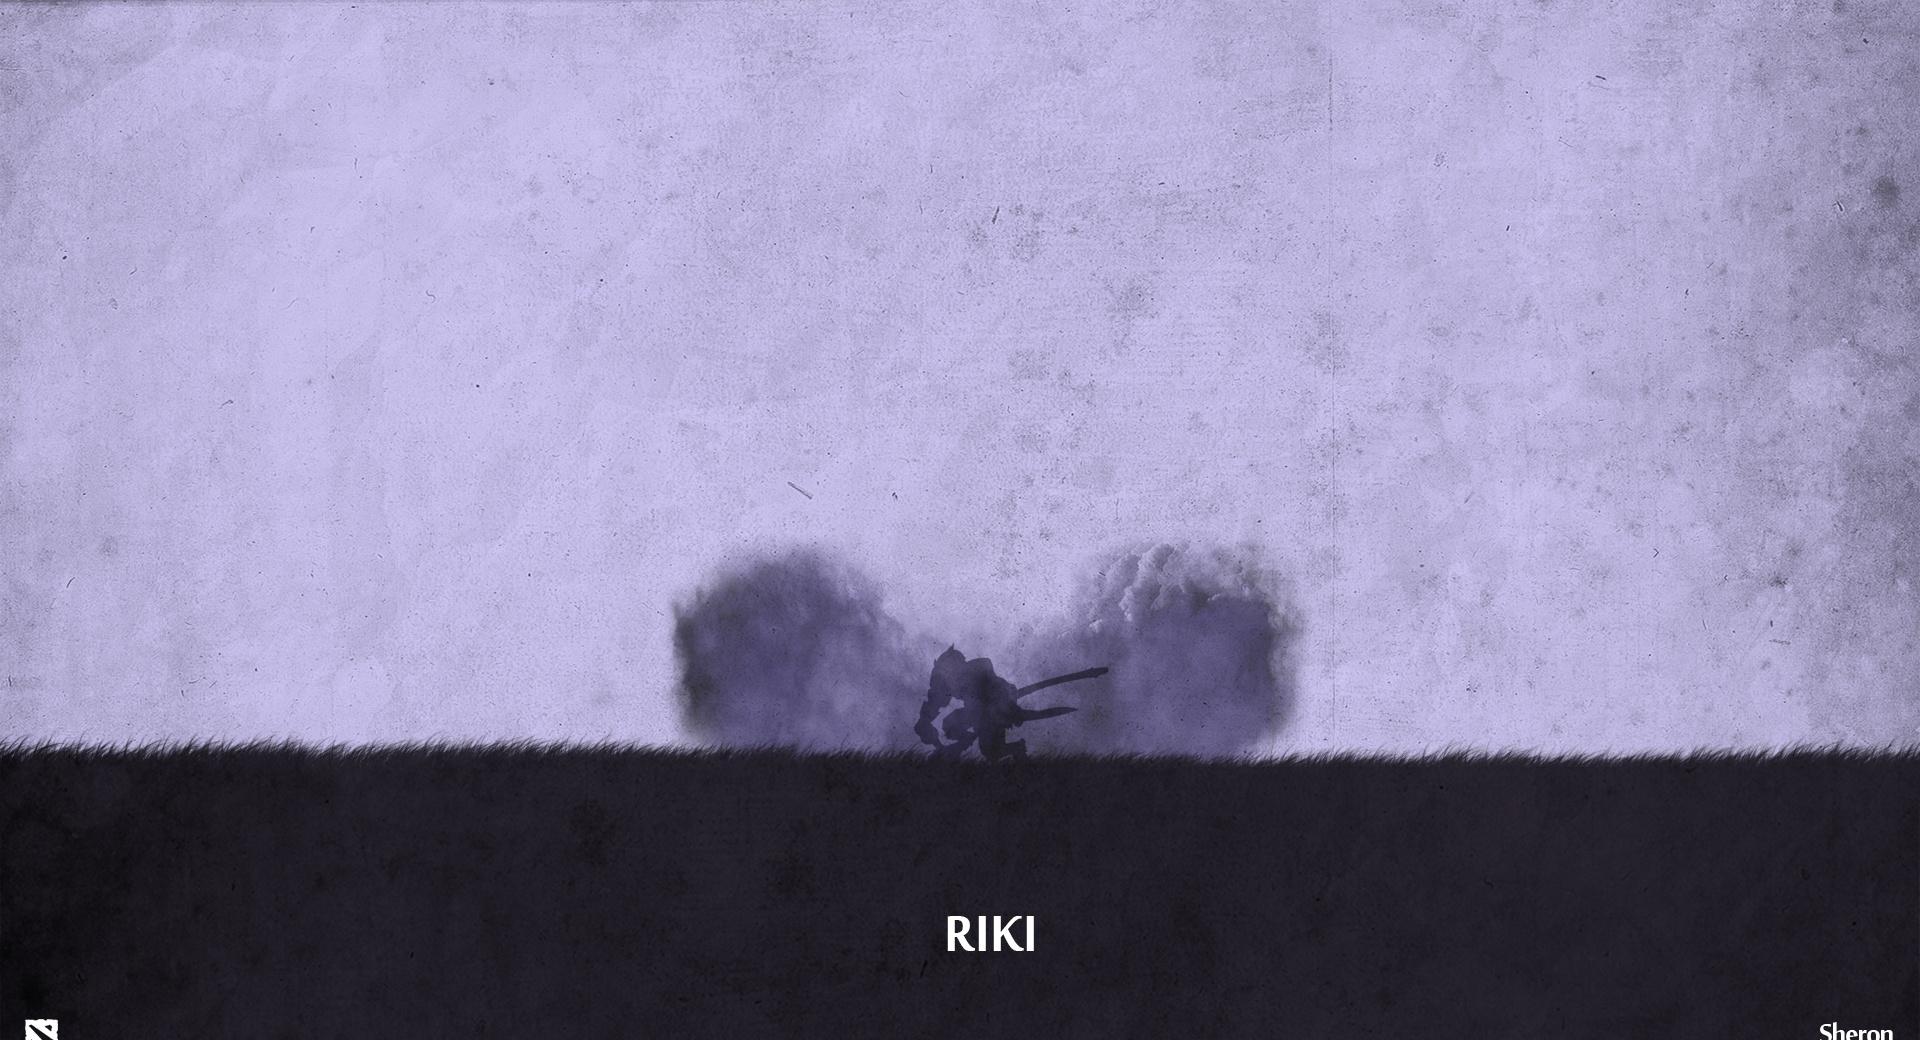 Riki - DotA 2 at 1024 x 768 size wallpapers HD quality